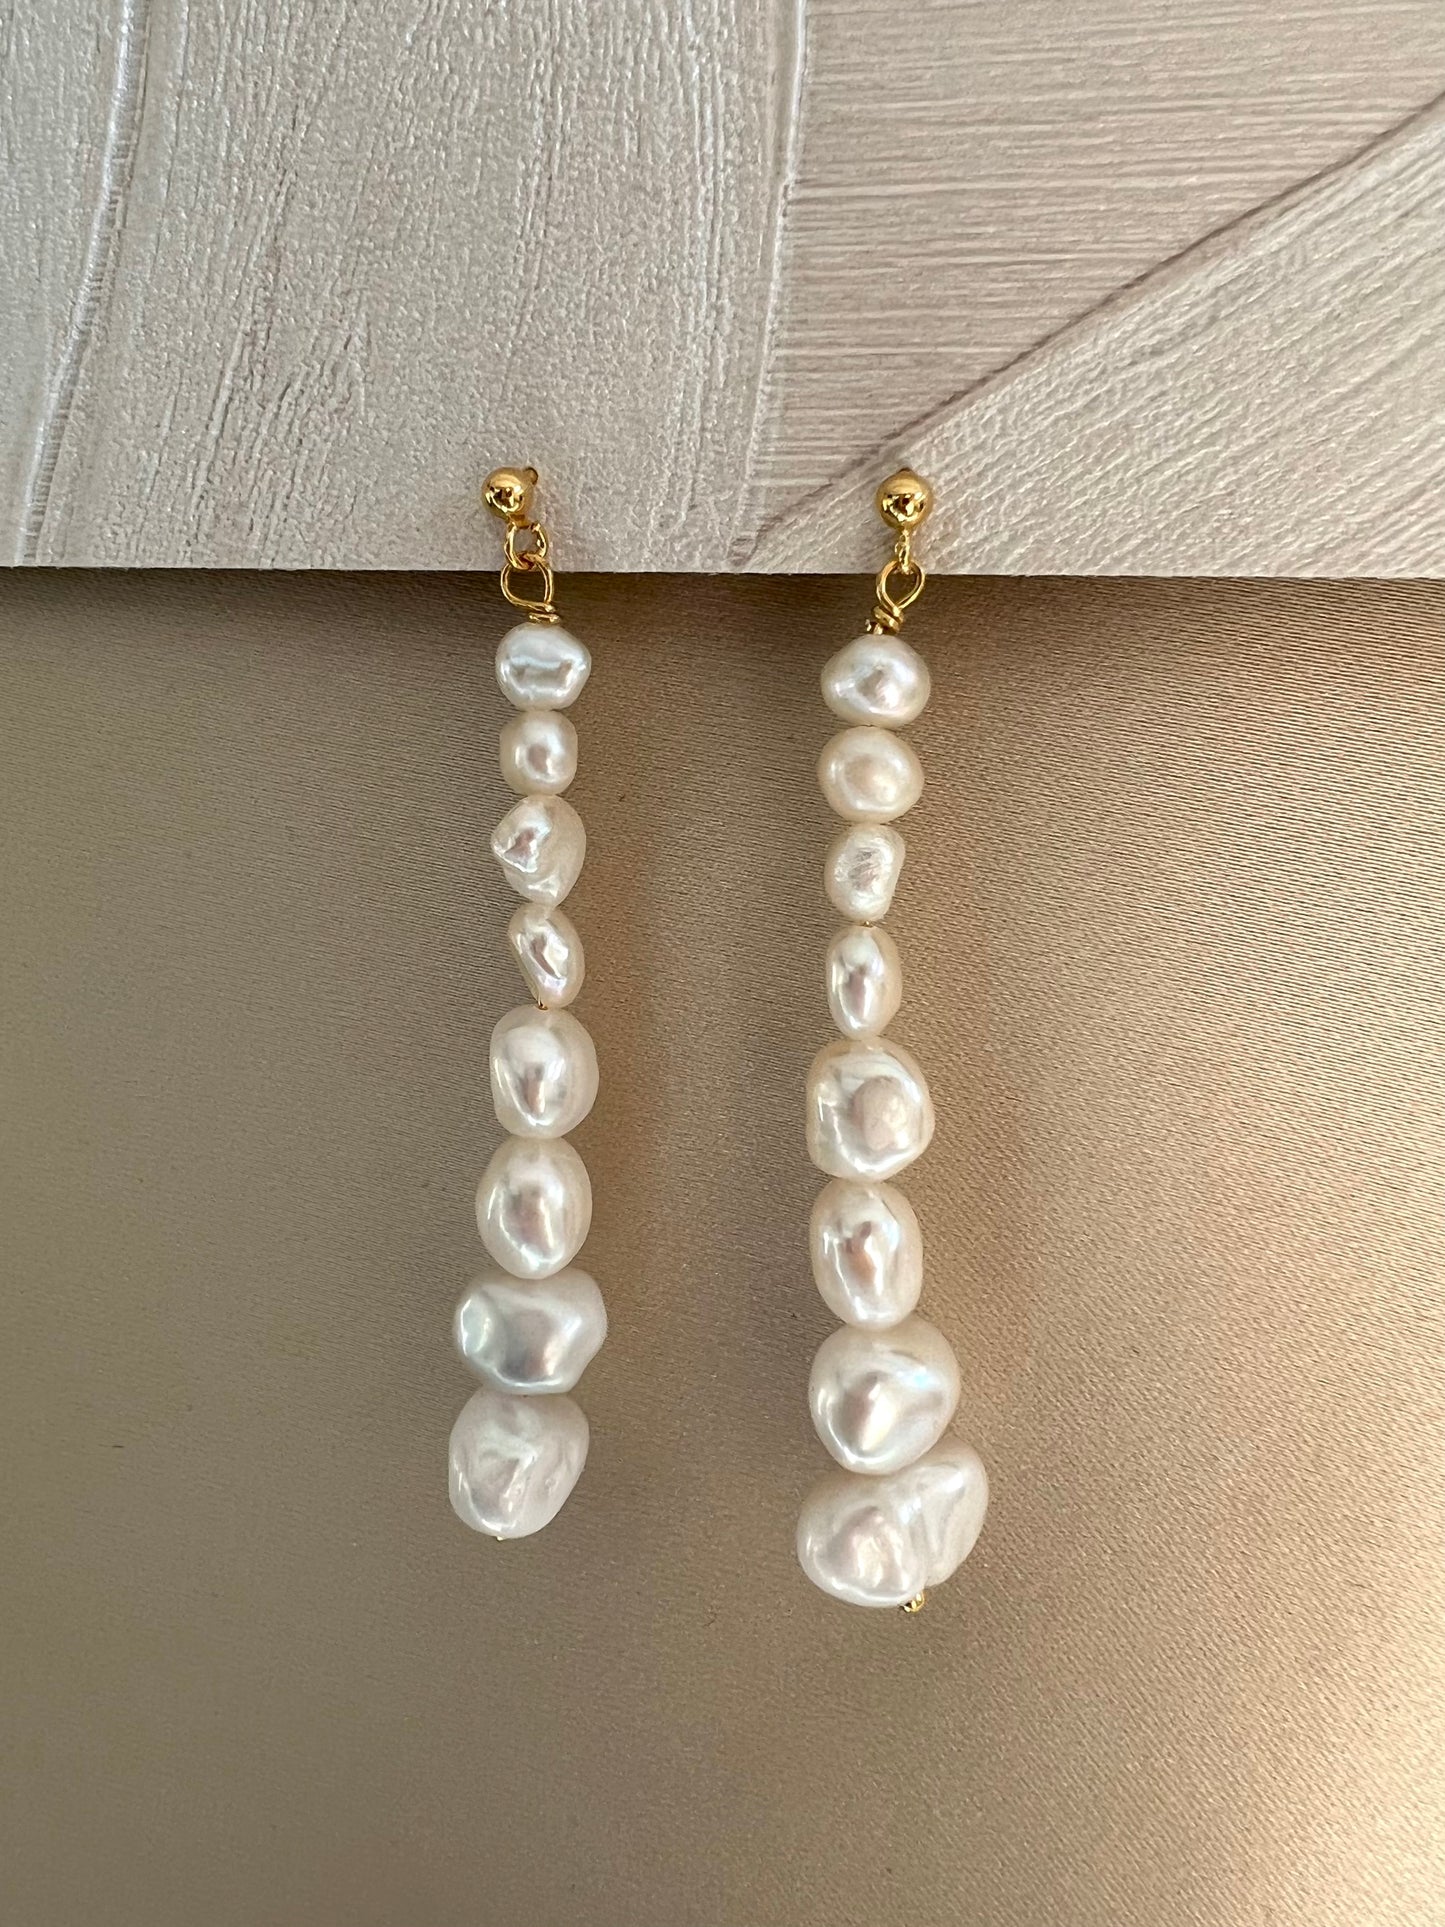 Pearly waterfall earrings